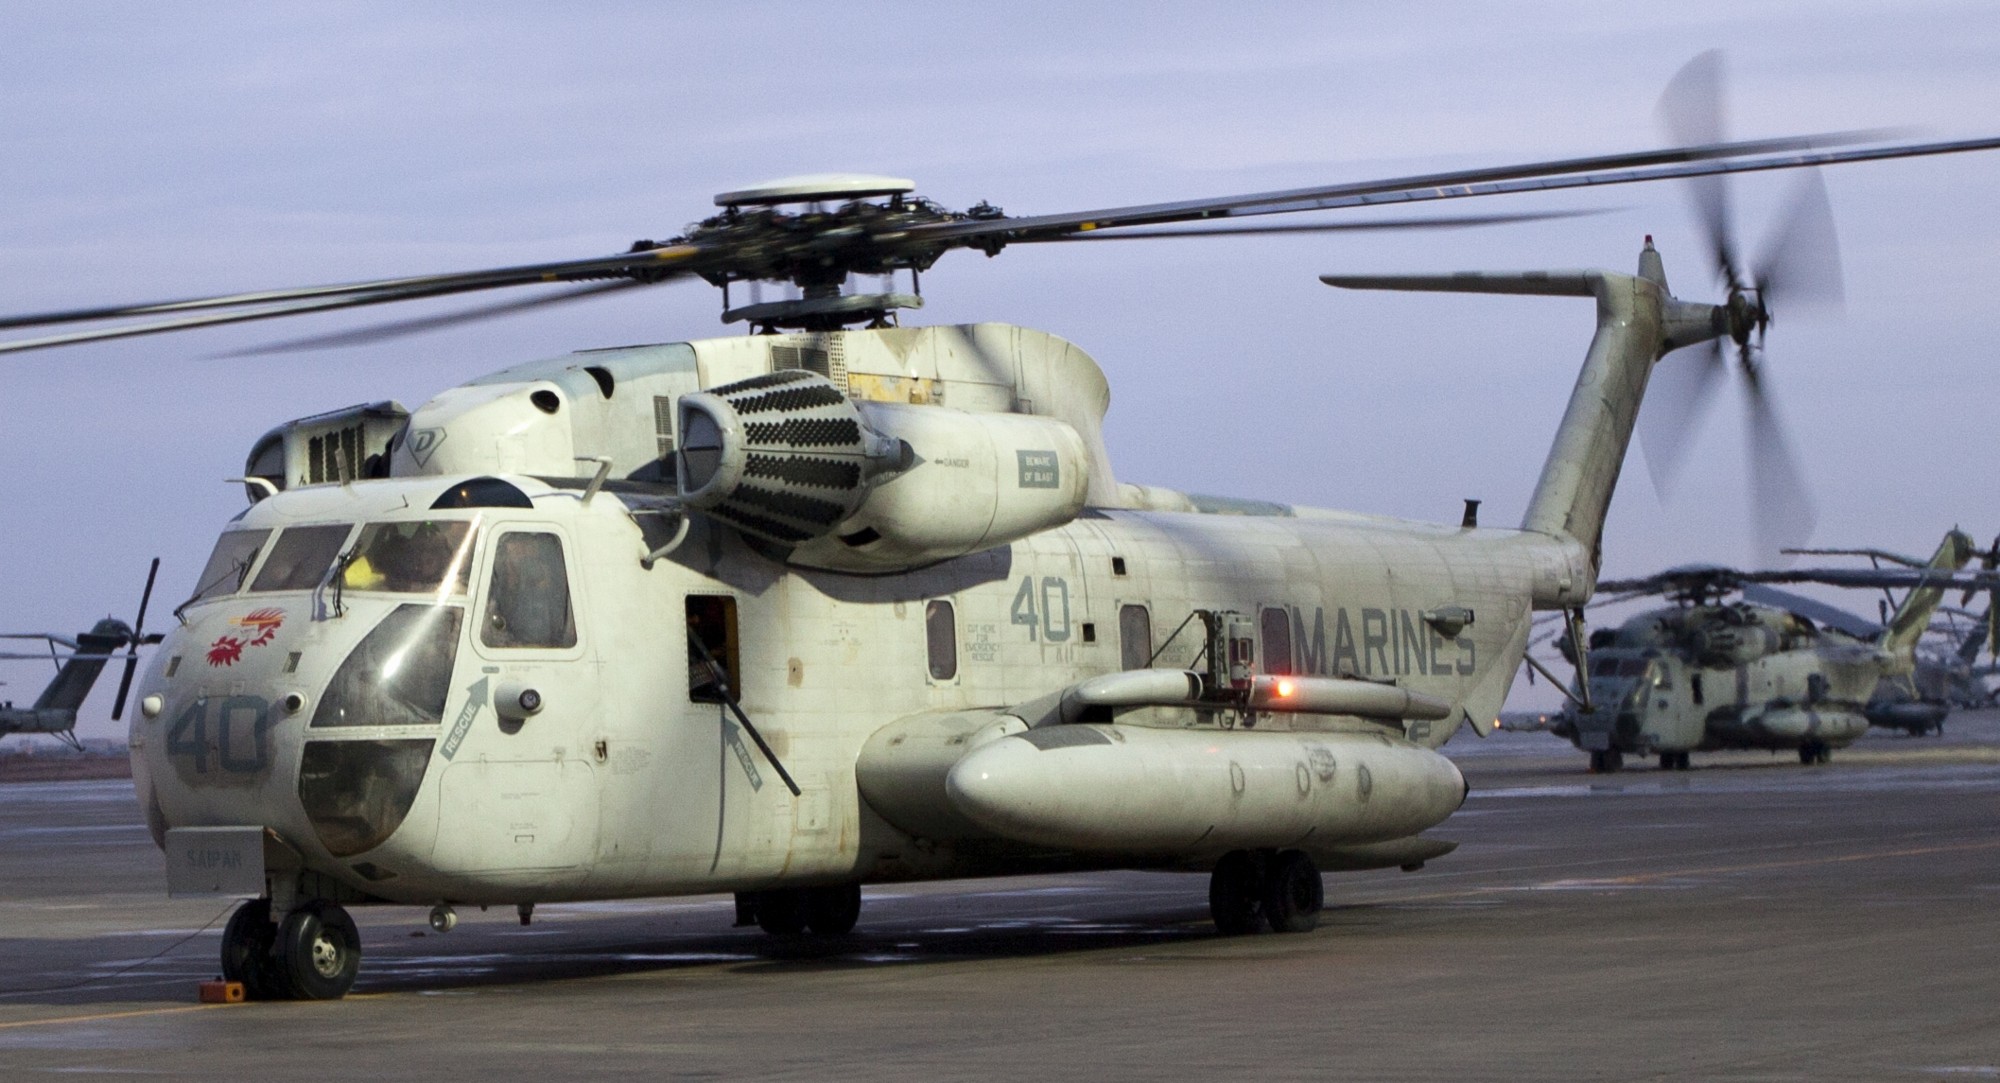 hmh-362 ugly angels marine heavy helicopter squadron usmc sikorsky ch-53d sea stallion 43 camp dwyer afghaniatan